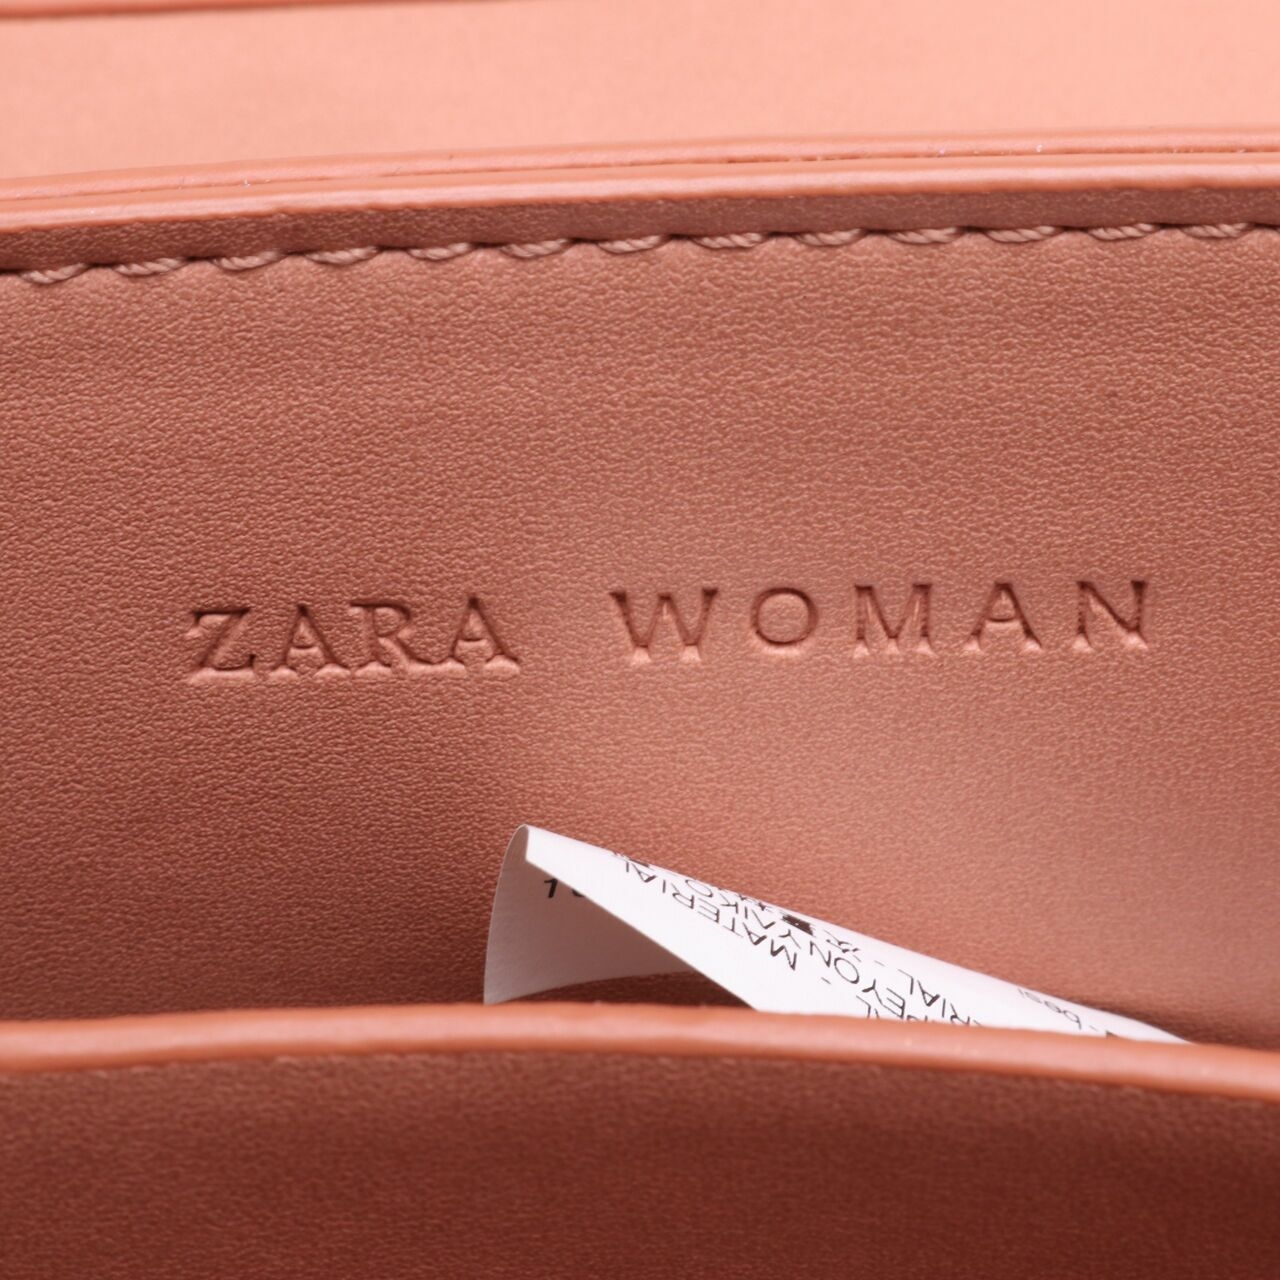 Zara Peach Sling Bag